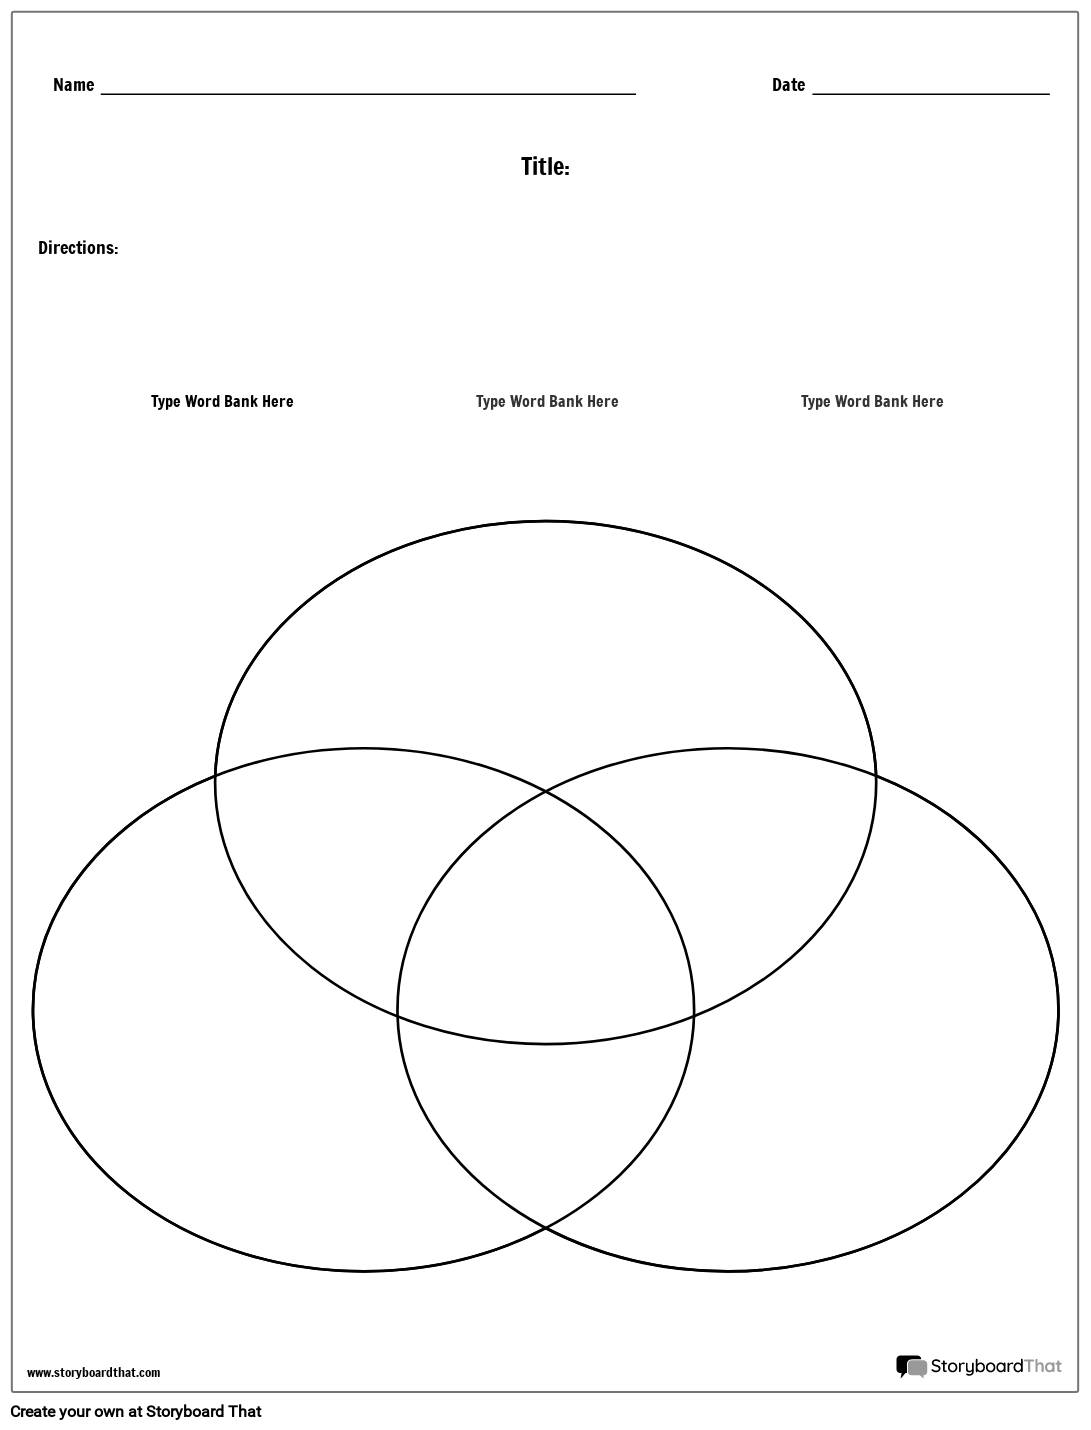 Venn-Diagramm - 3